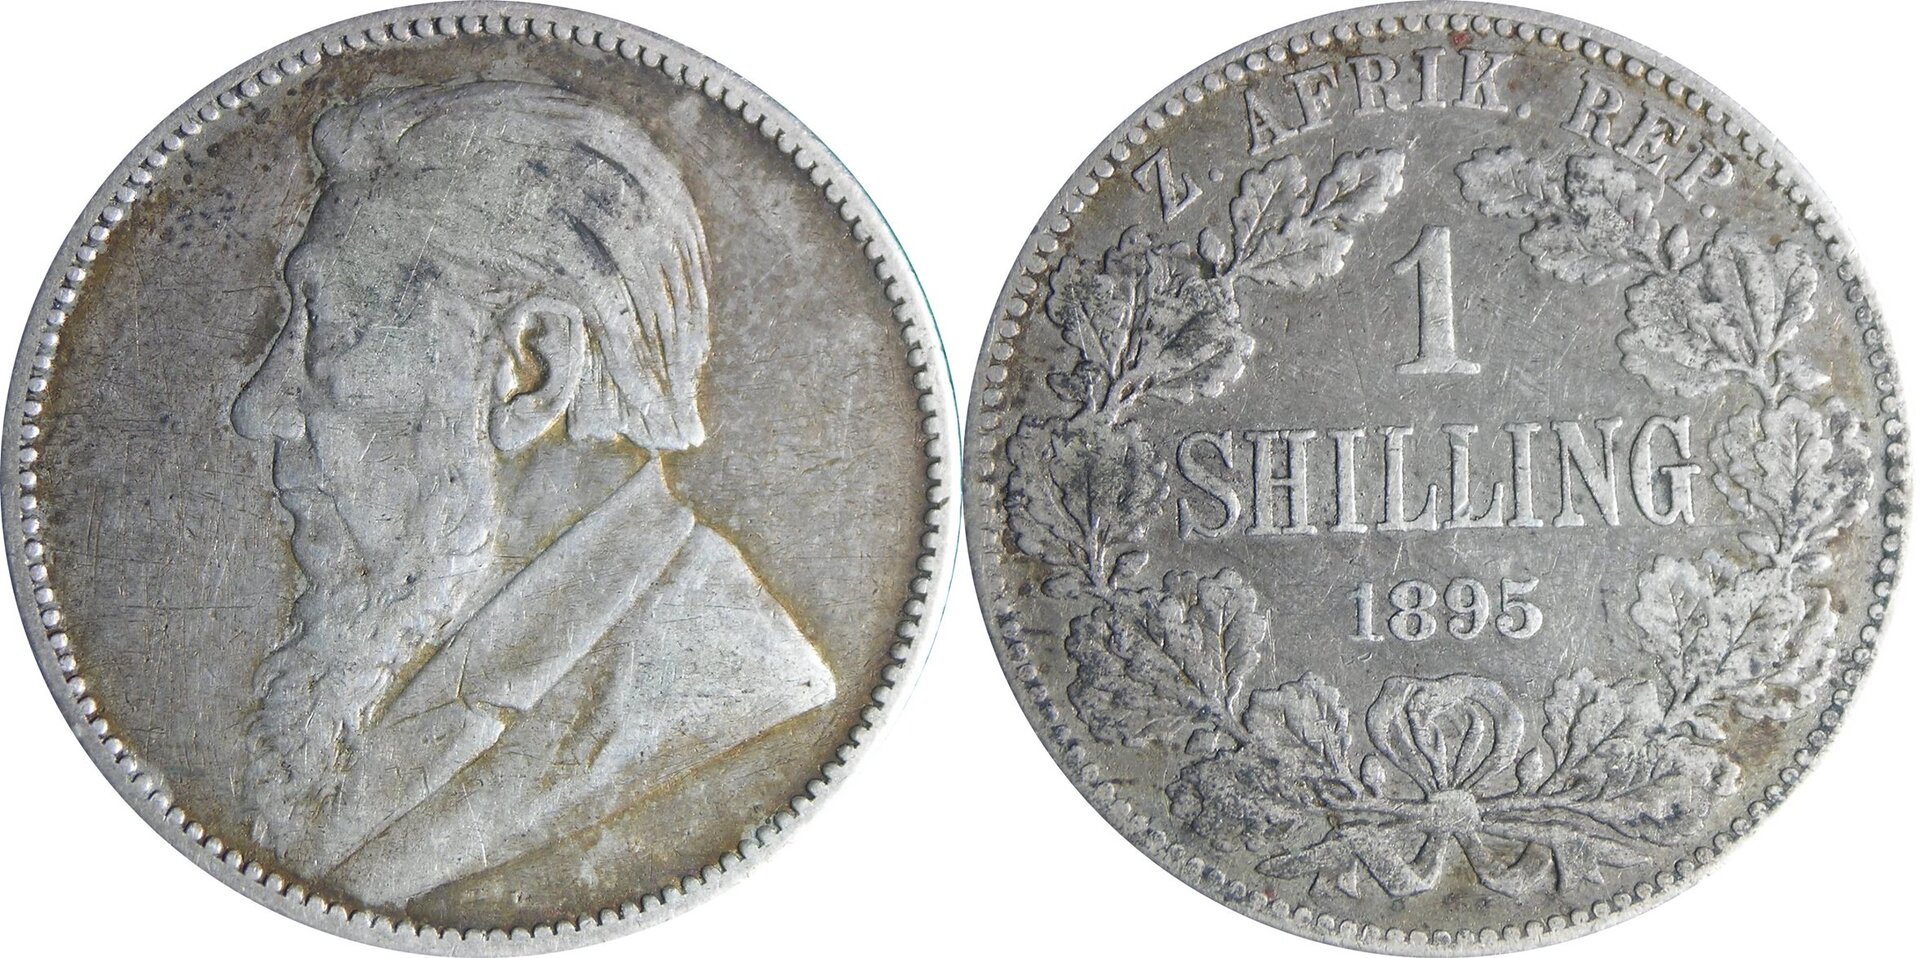 1895 ZAR shilling.jpg